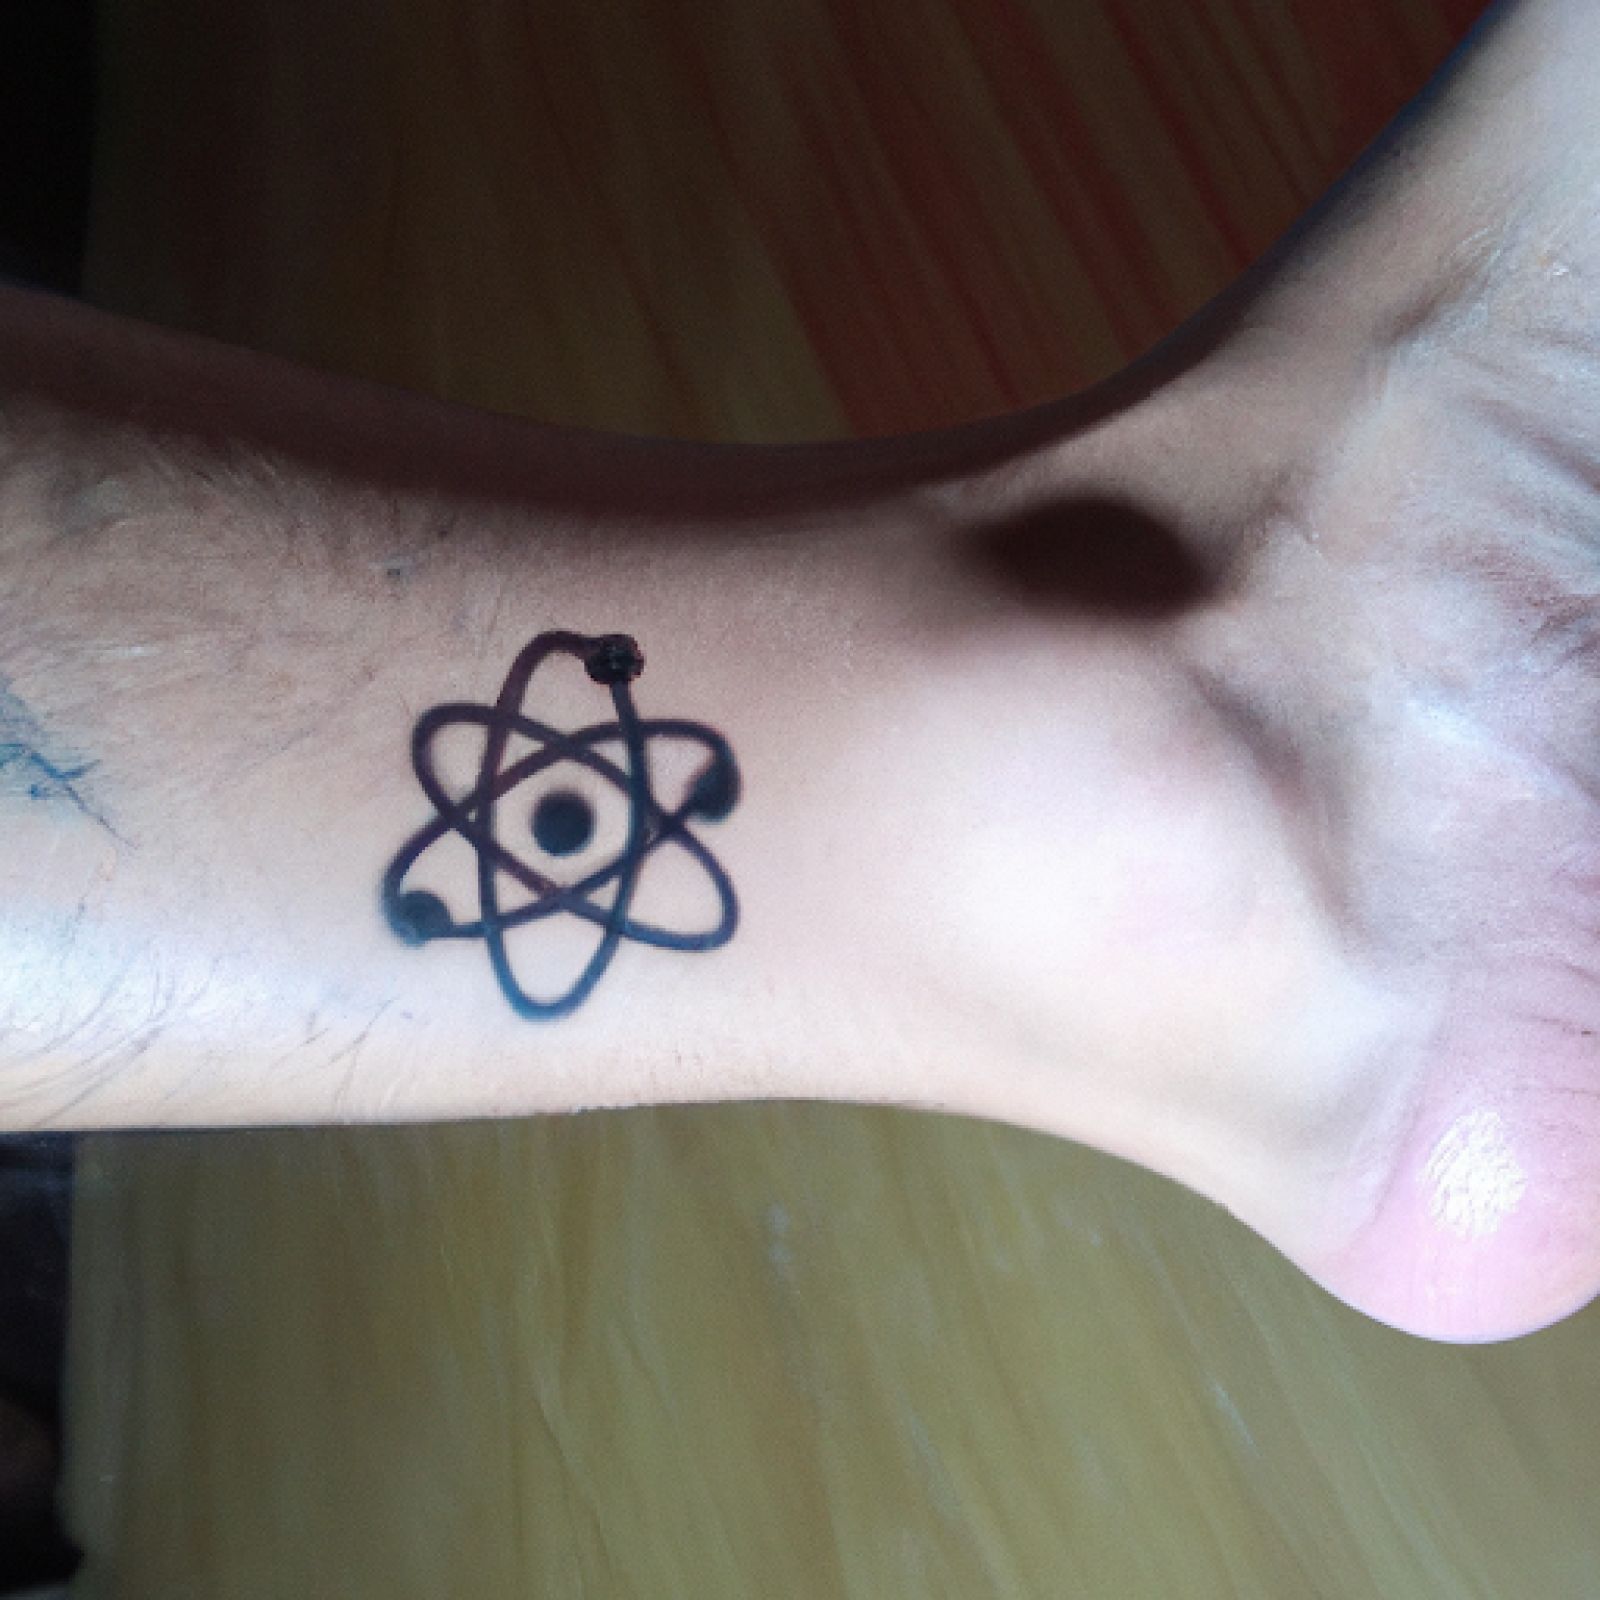 Atom tattoo on ankle for men